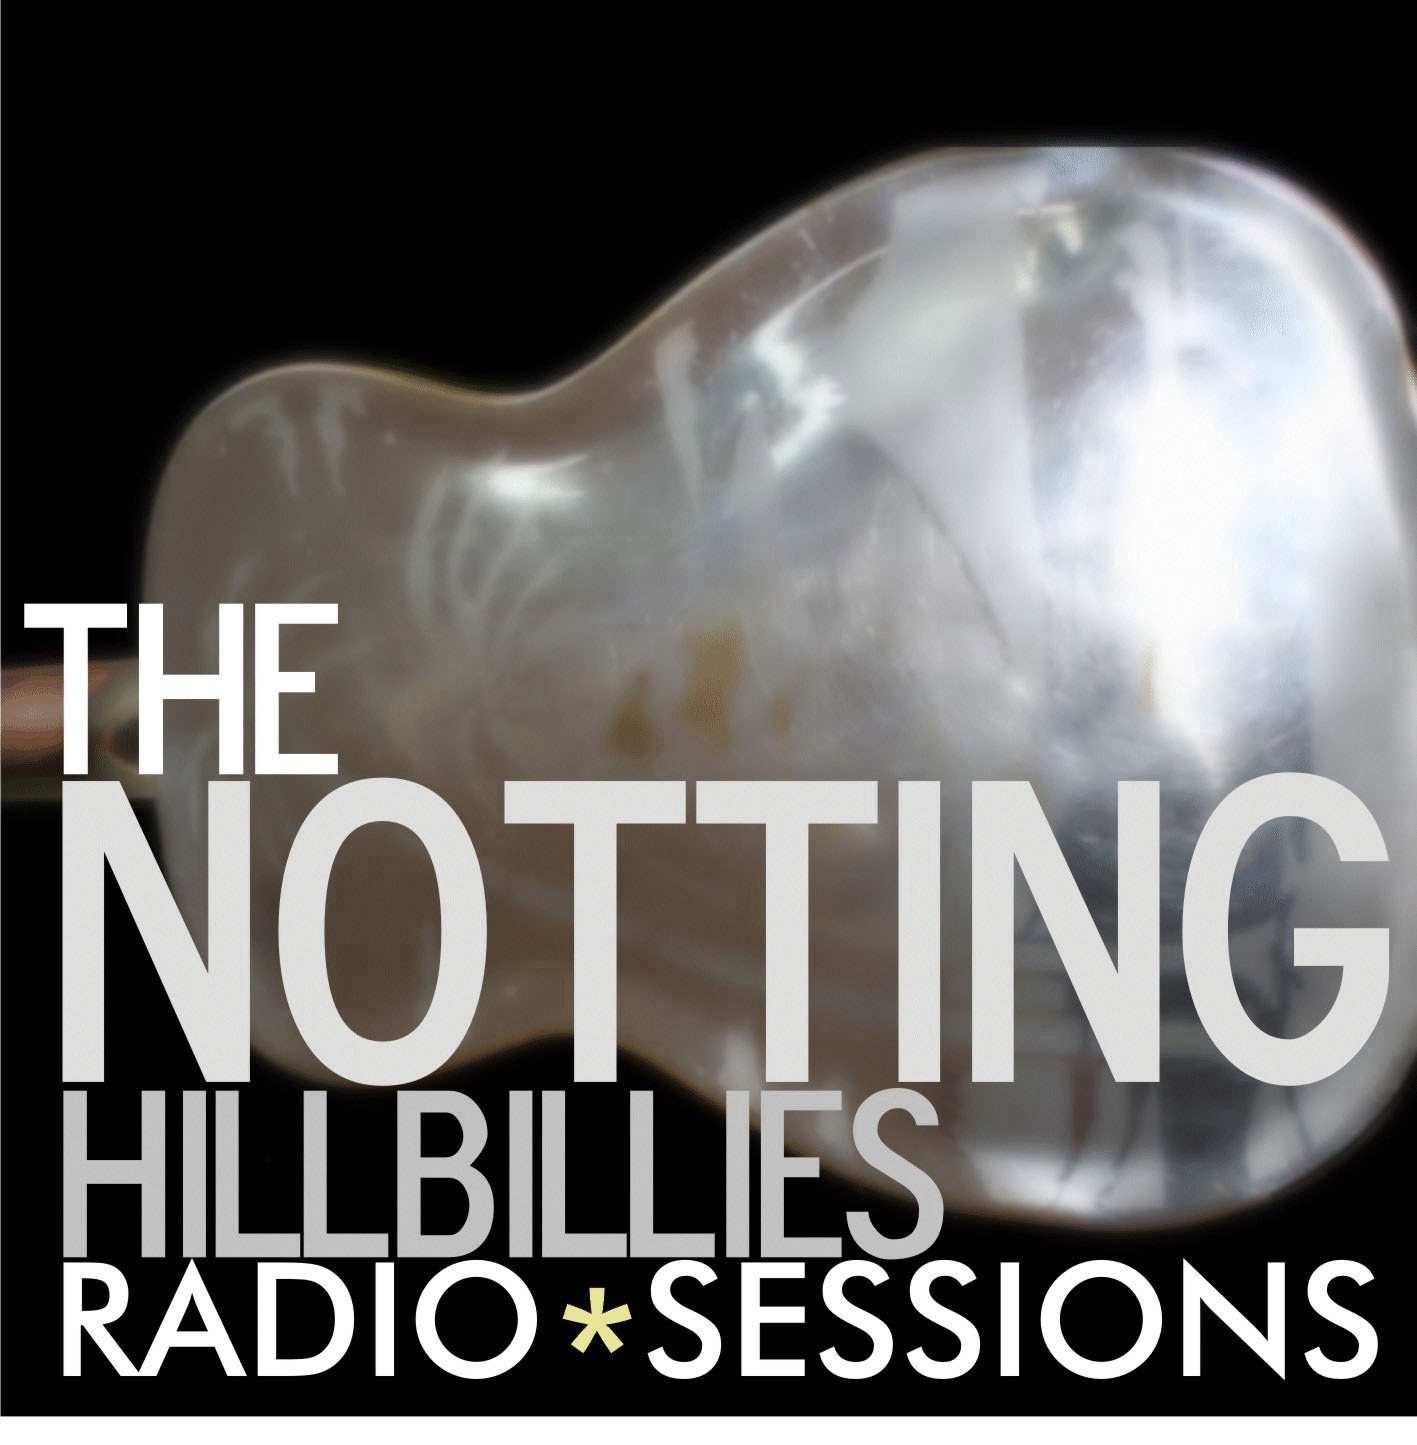 NottingHillbillies1988-22001RadioSessionsBBCLondonUK (2).jpg